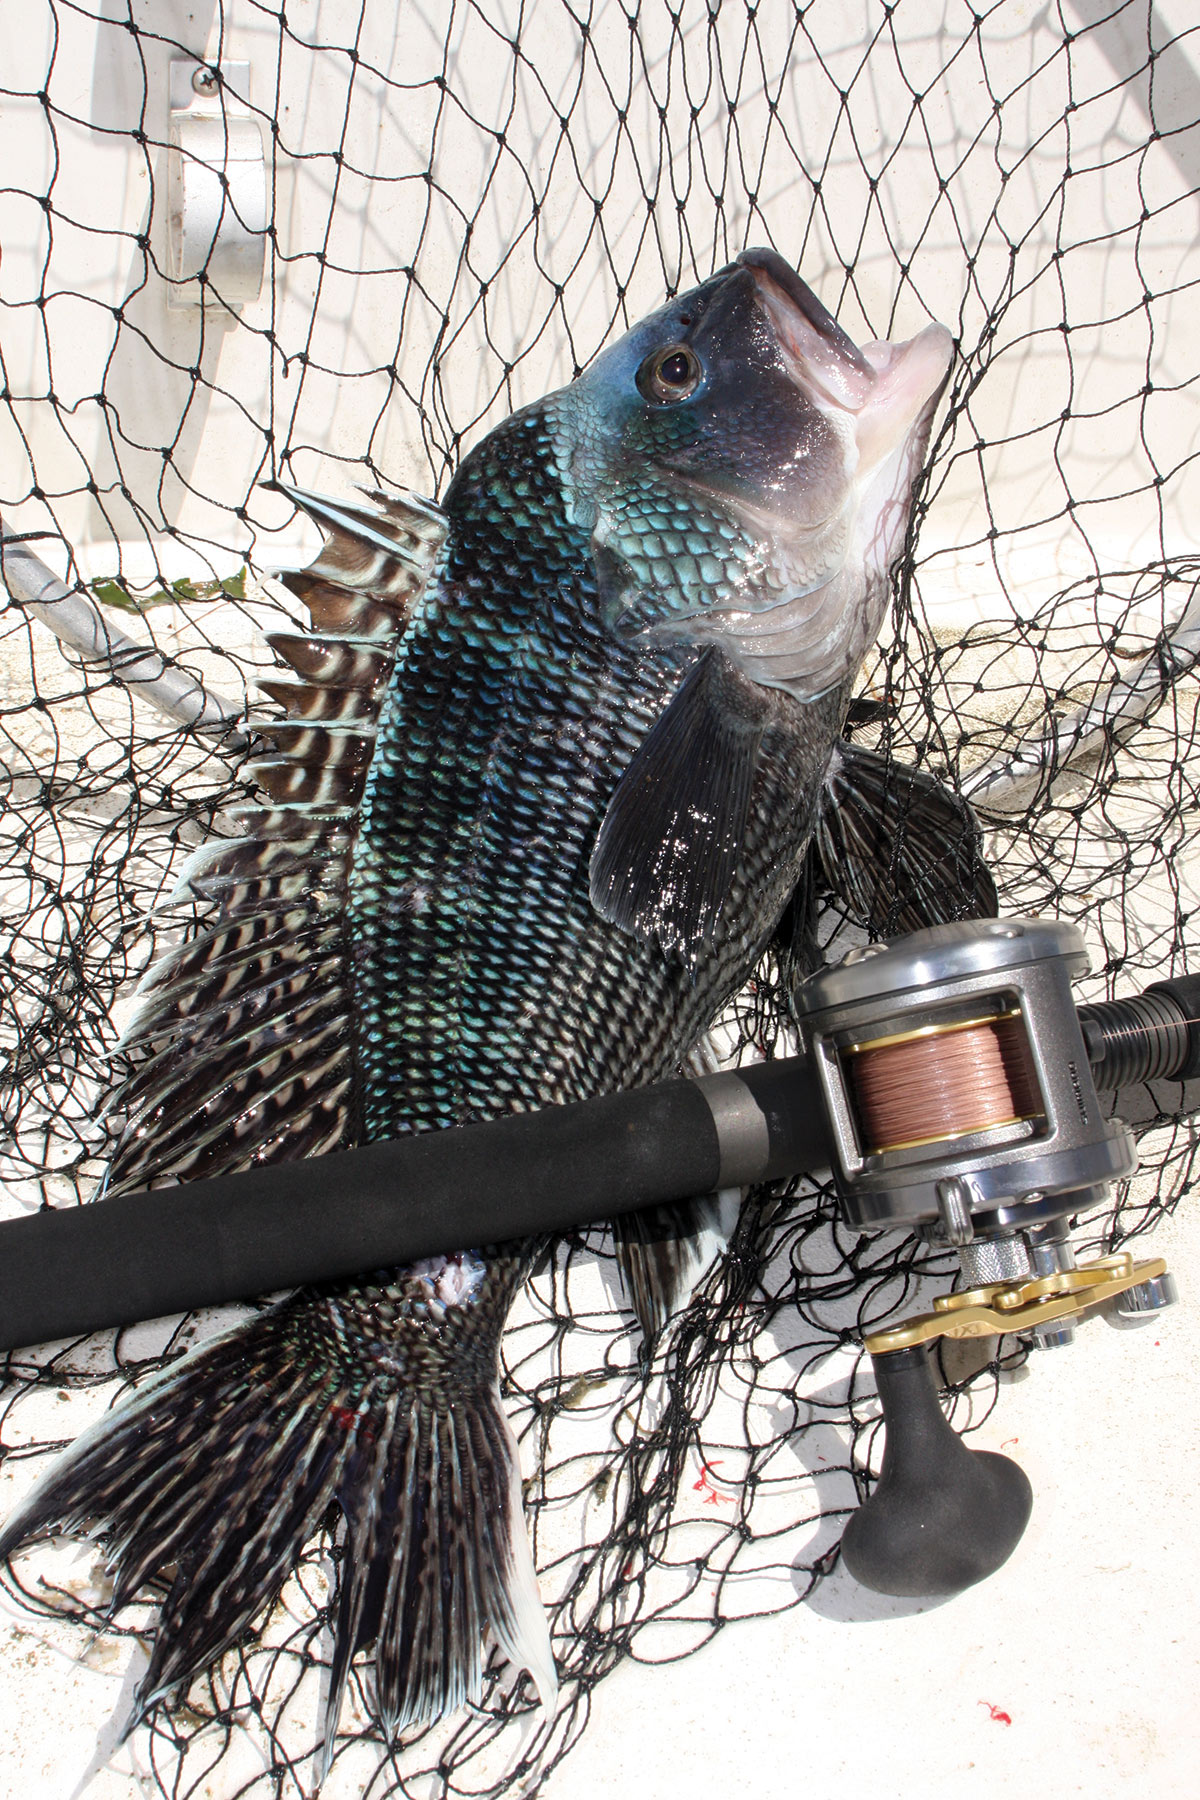 Black sea bass on top of fish net beside a fishing rod